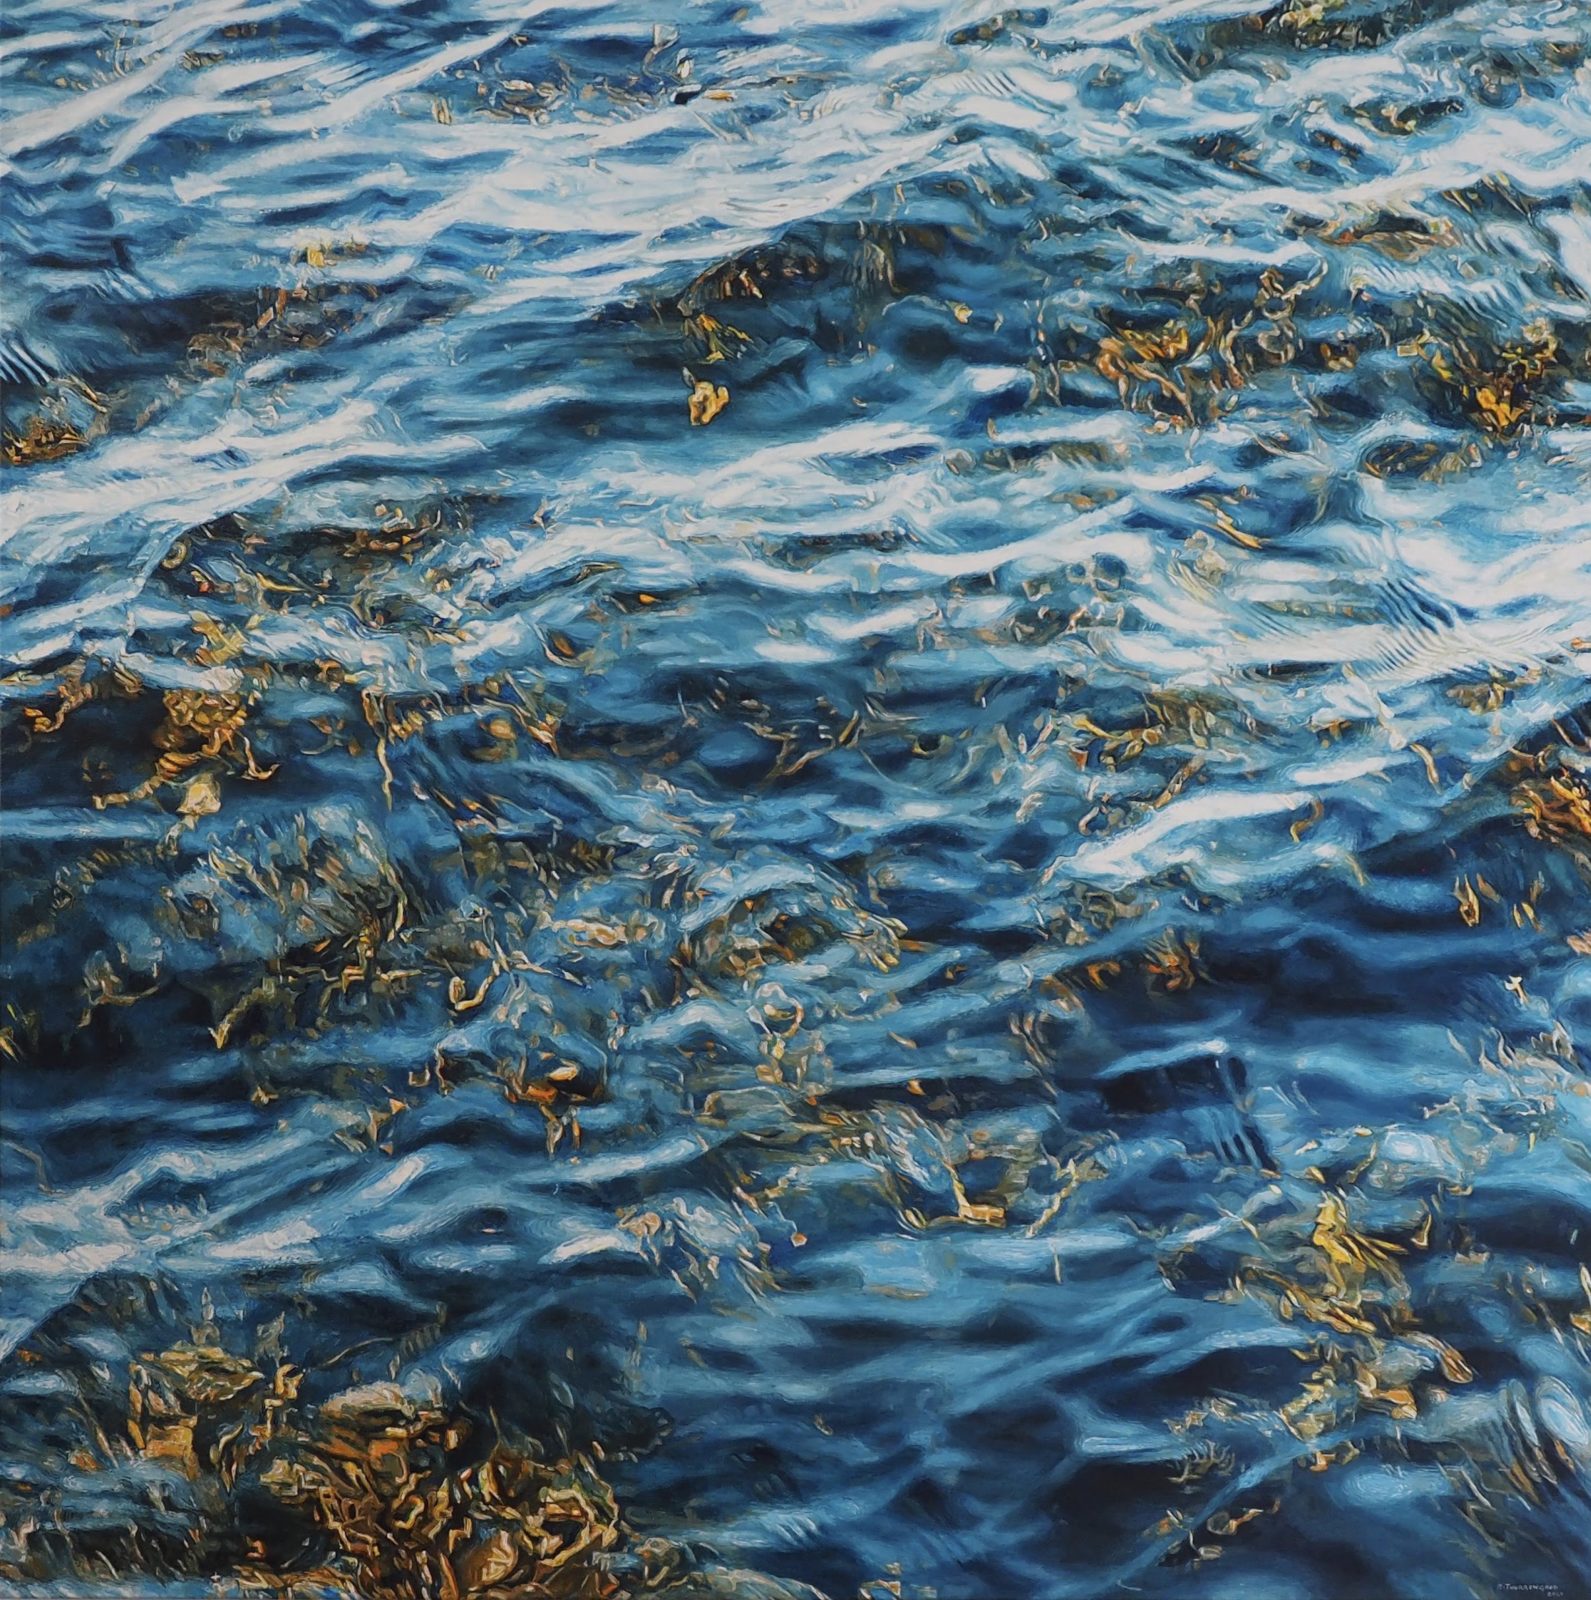 ‘Looking in - blue water II’